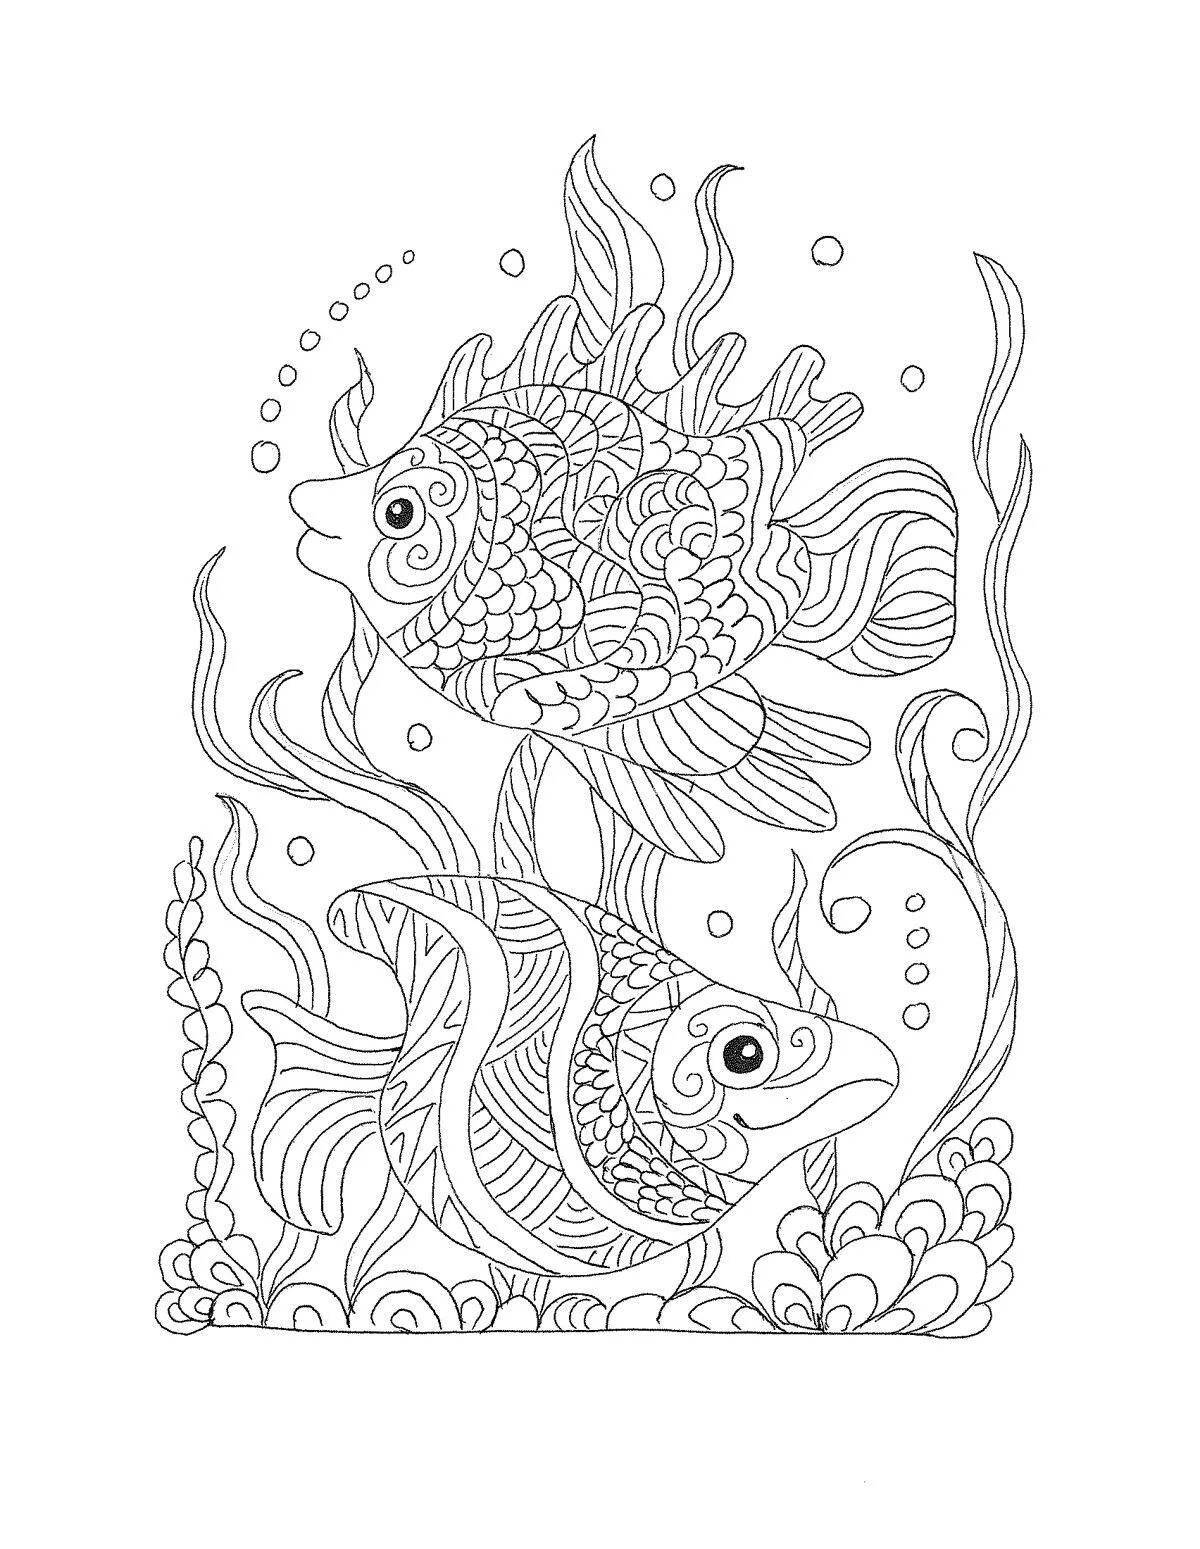 Coloring book glowing anti-stress fish